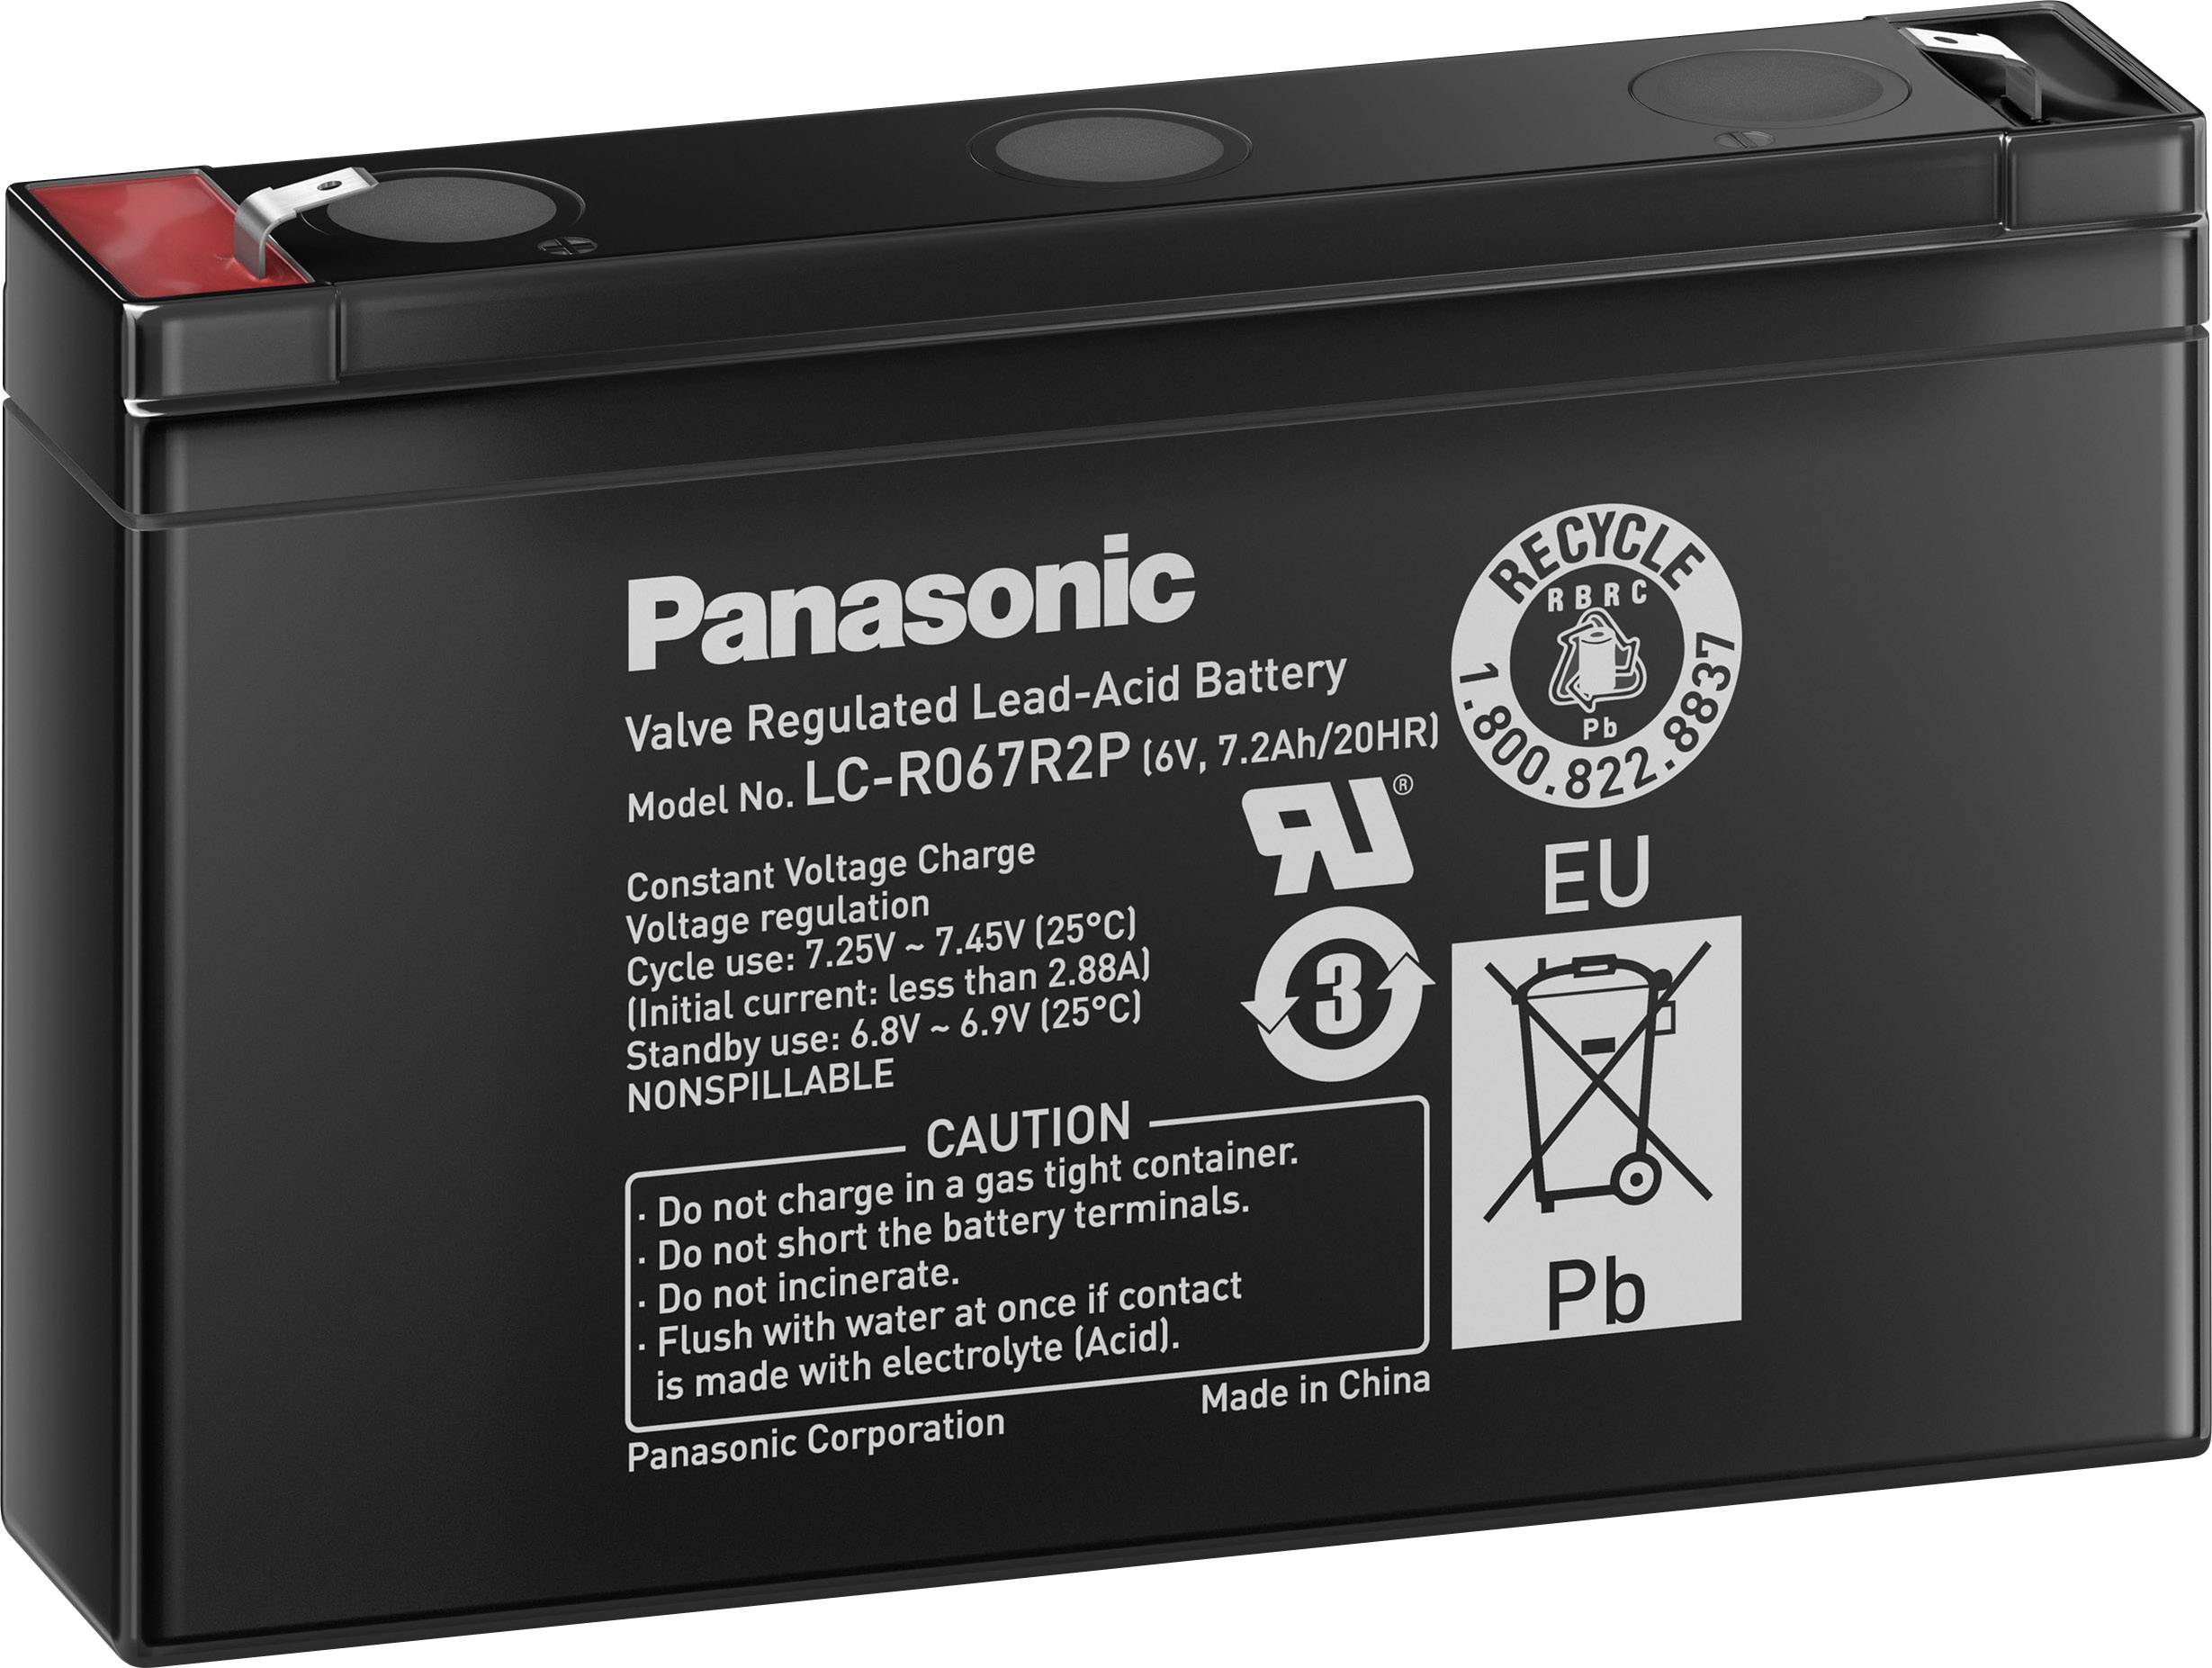 Panasonic lc-r067r2p piombo-batteria 6v 7,2ah Lead-Acid Batteria bleigel UPS 858247 